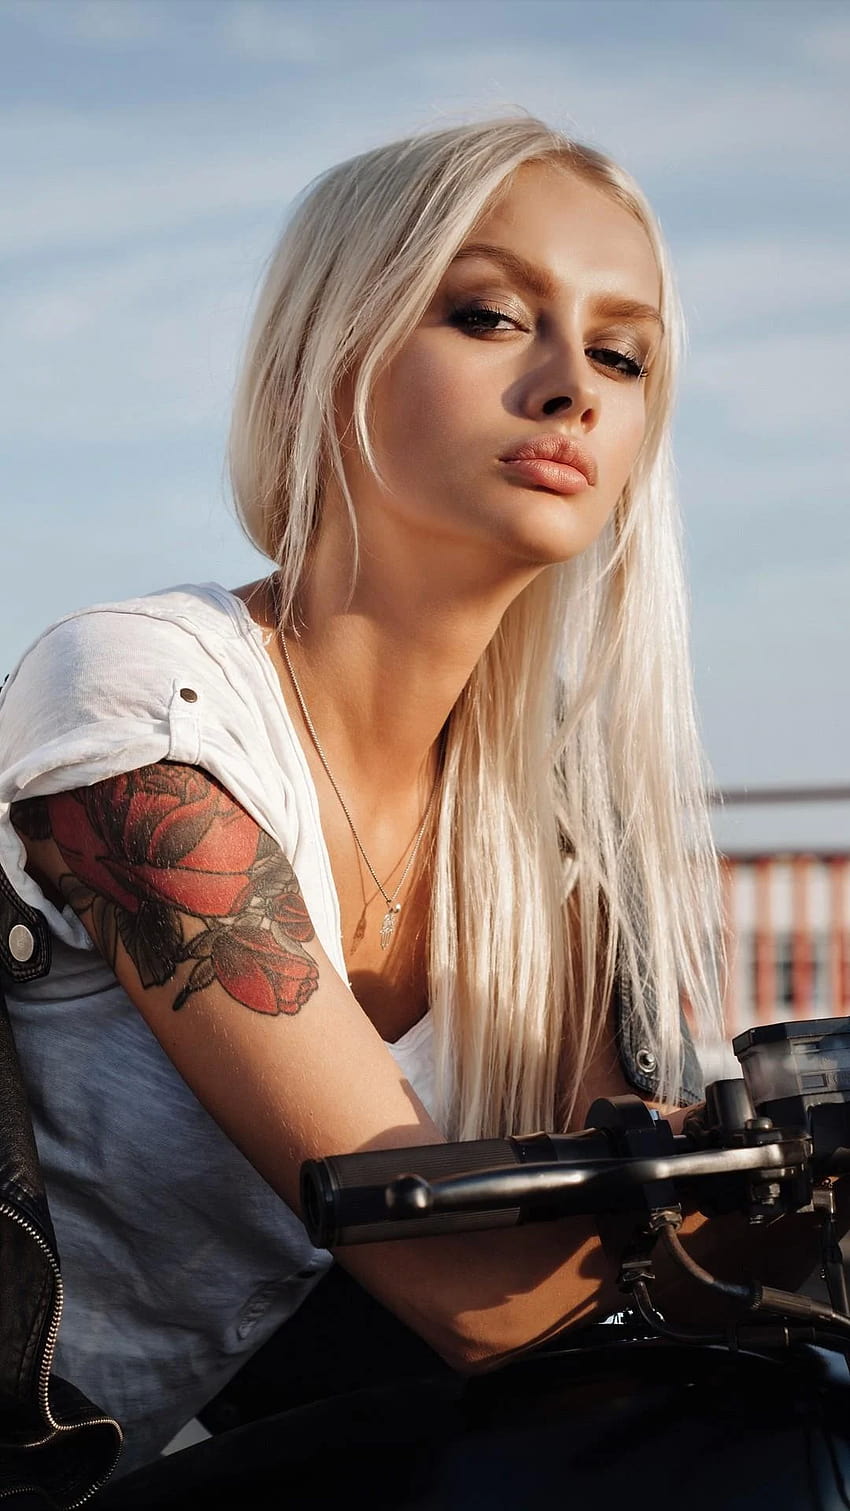 1080x1920 Chica tatuada en moto Iphone 7,6s,6 Plus, chica tatuada en iphone fondo de pantalla del teléfono